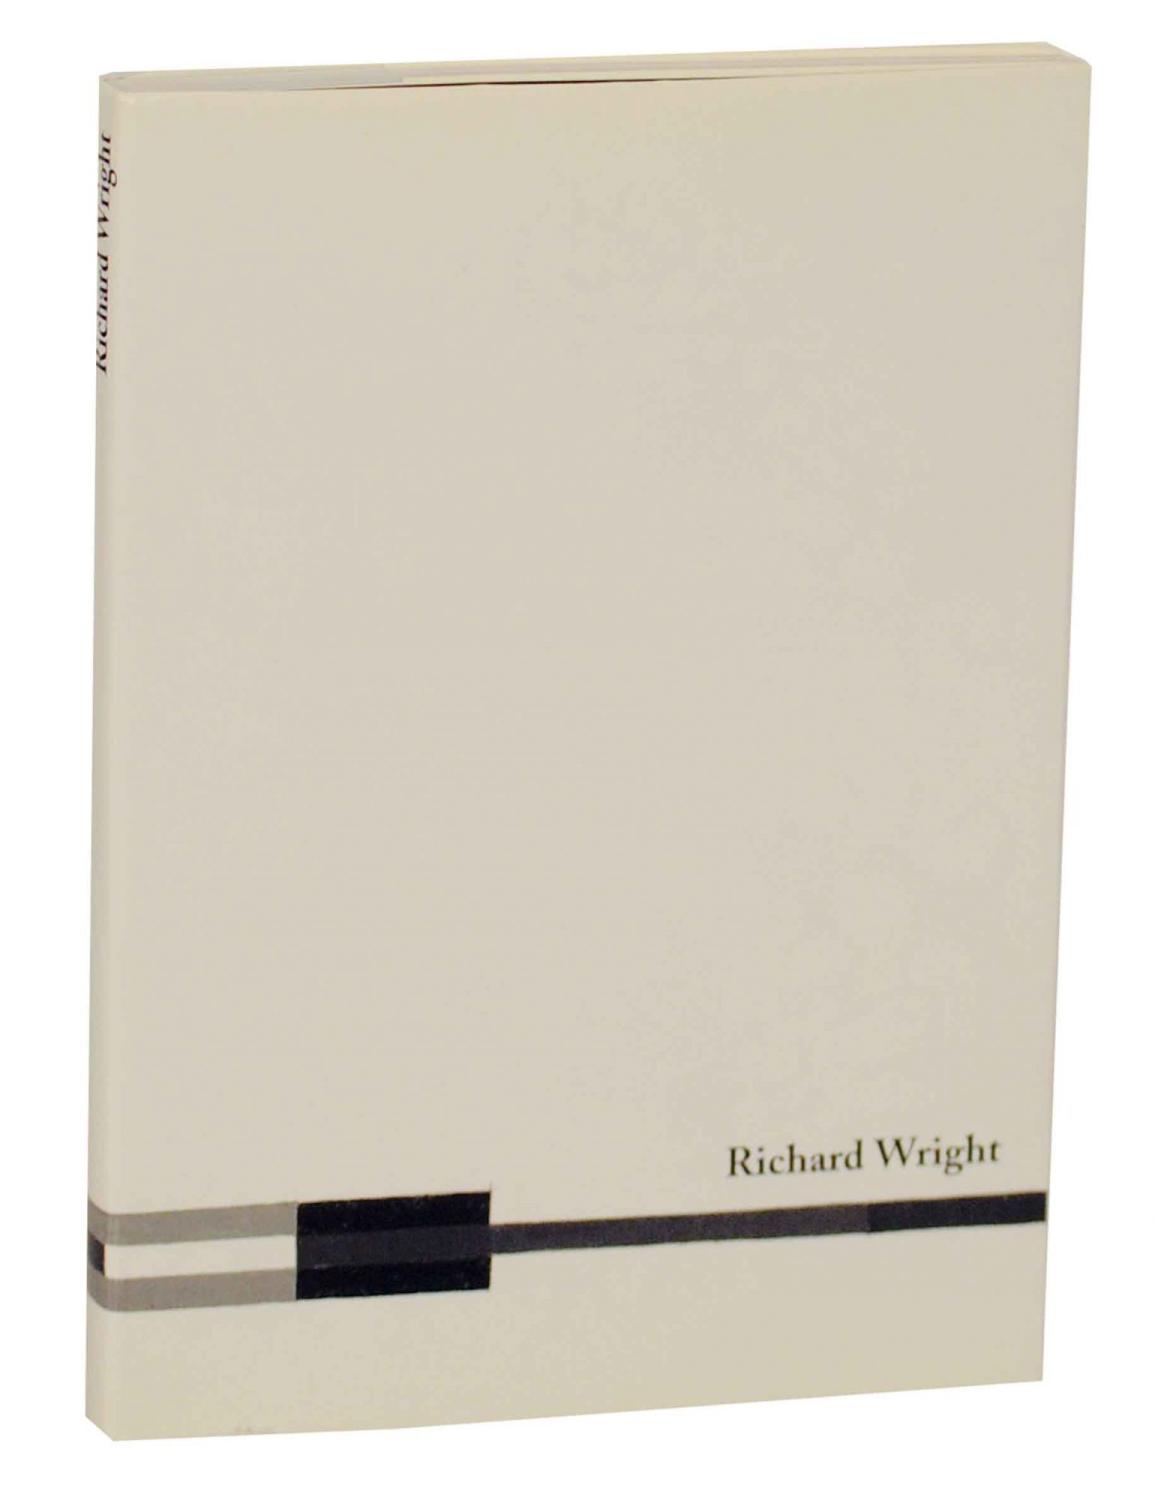 Richard Wright: Southeast Corner of Things - WRIGHT, Richard, Mark Hamilton and Thomas Lawson